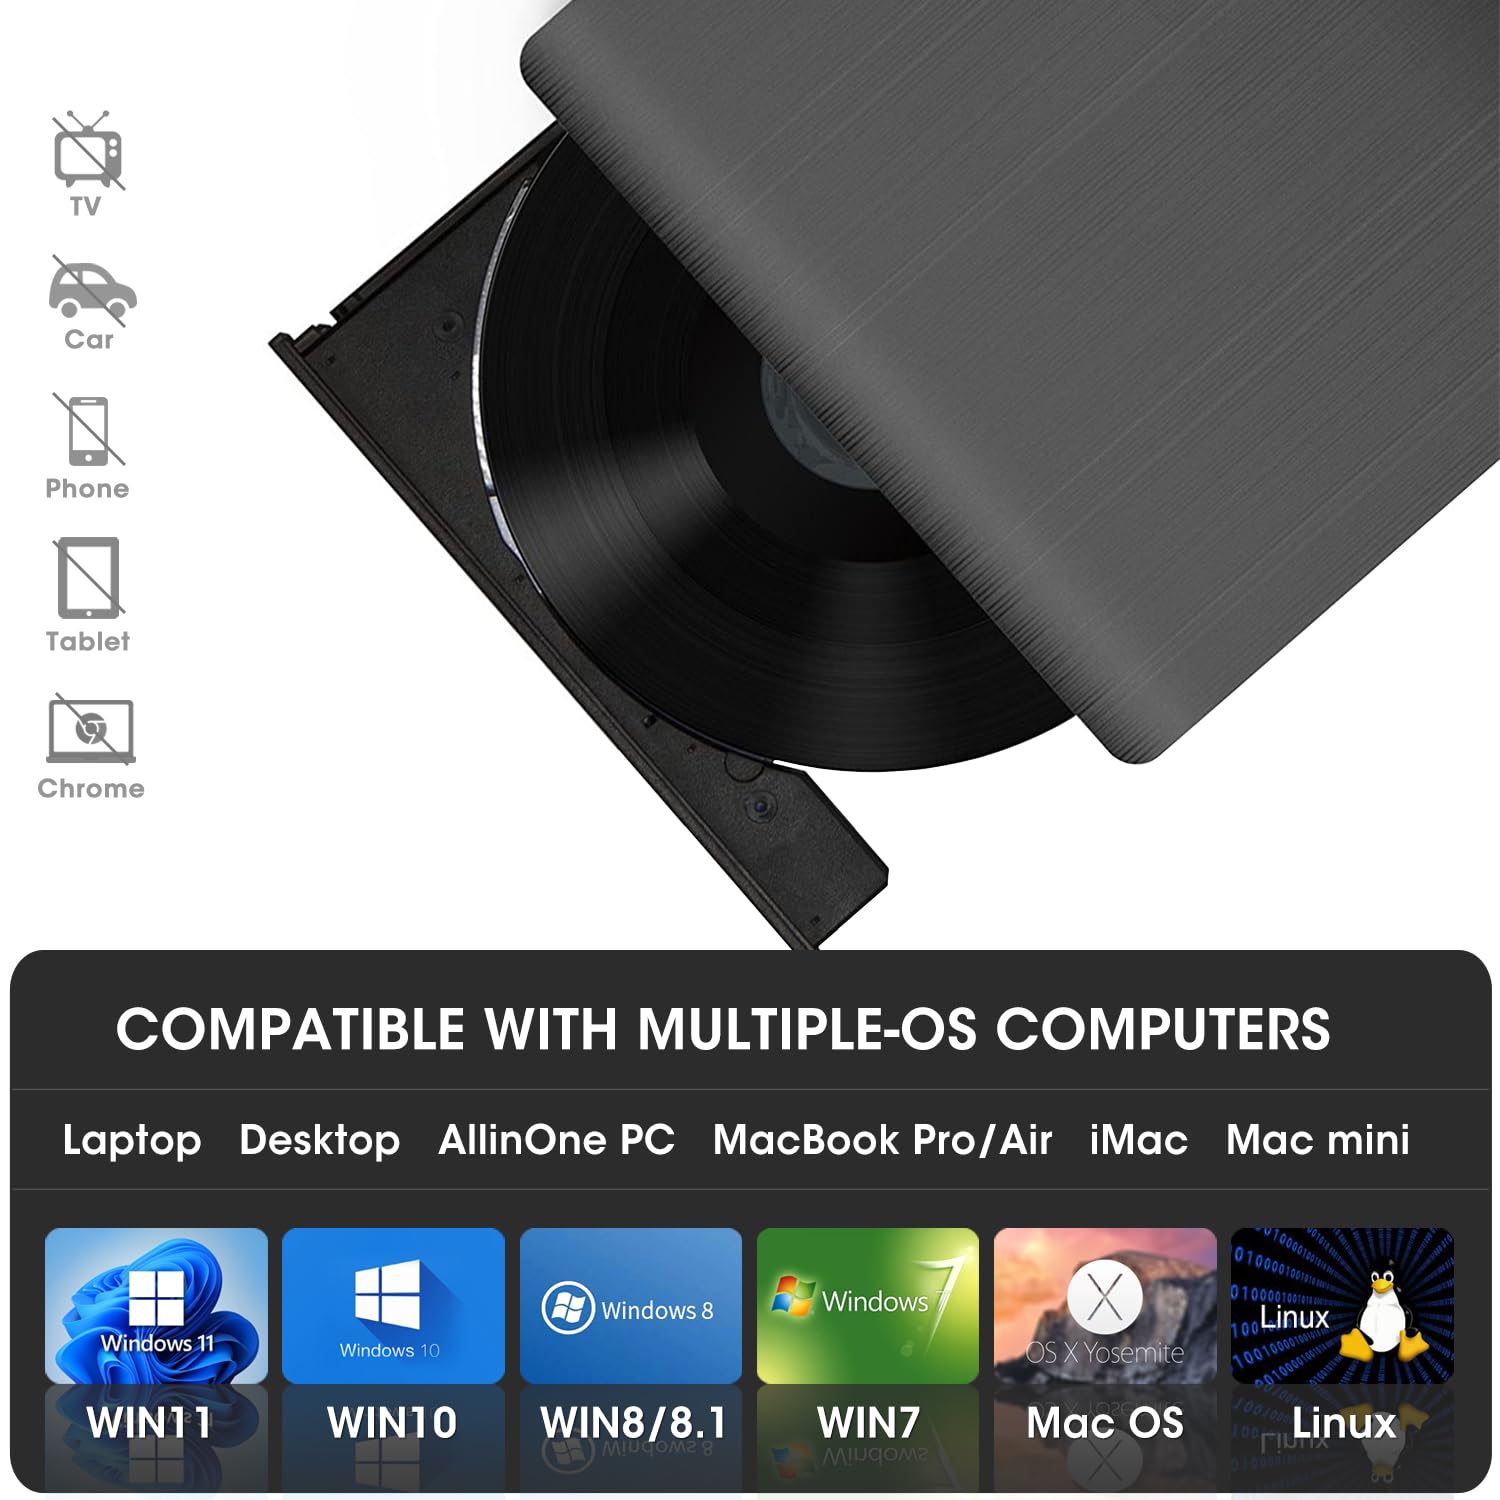 ROOFULL External CD DVD +/-RW Drive for Laptop USB 3.0 Portable DVD/CD-ROM Burner Player Reader Writer Rewriter Optical Disk Drive for Laptop PC Windows 11/10/ 8/7, Mac, Linux OS, Black (Updated)